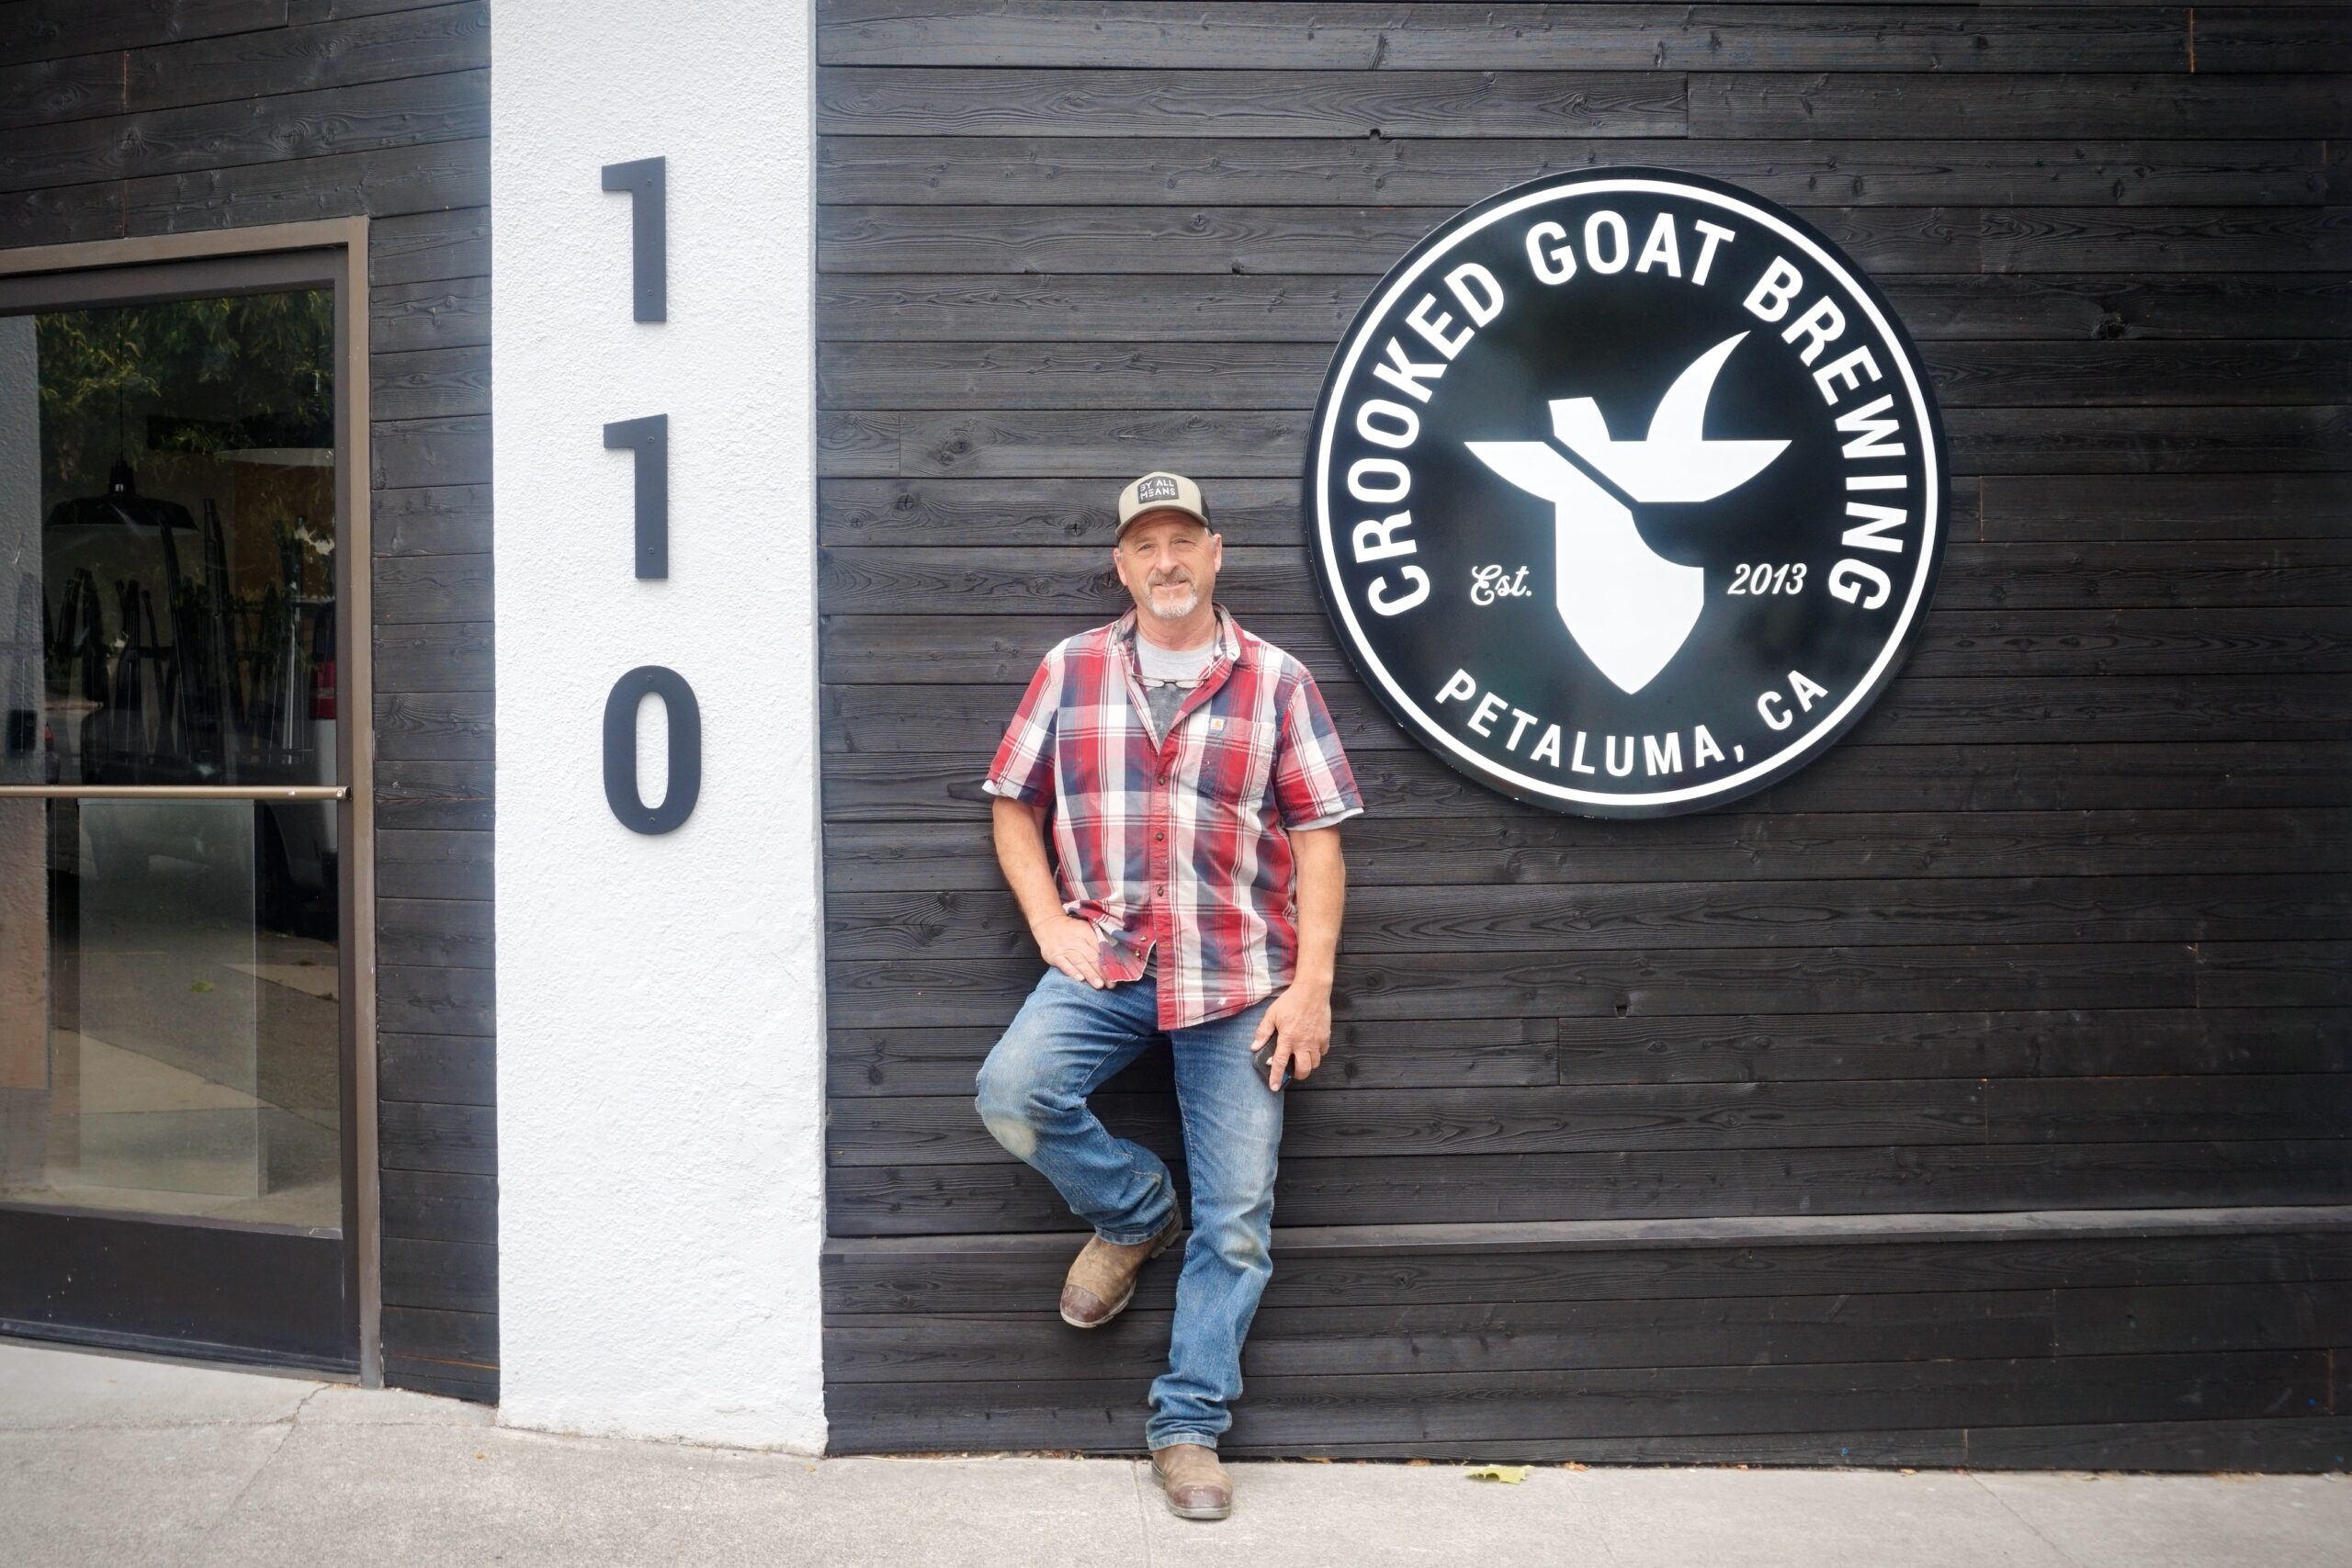 Paul Vyenielo of Crooked Goat Brewing, outside the new taproom in Petaluma. (Tina Caputo)